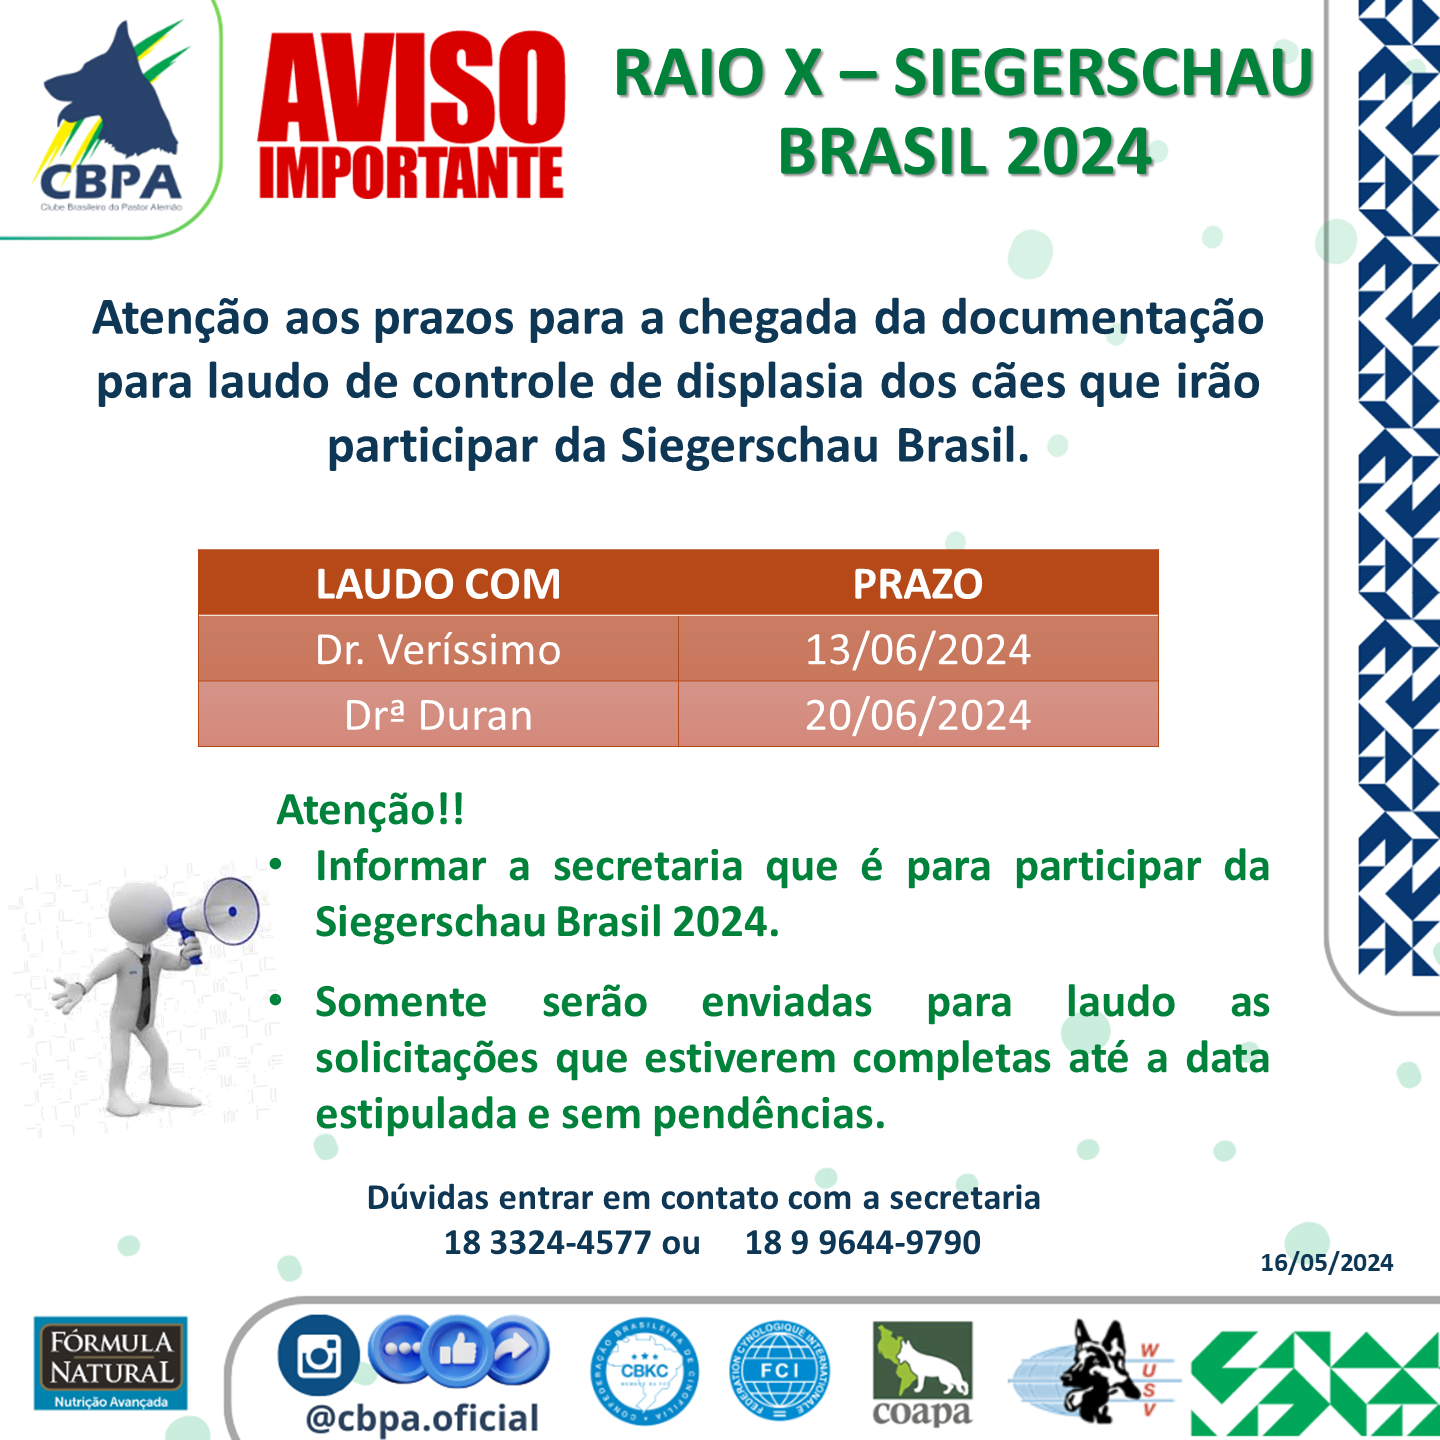 Raio X - Siegerschau Brasil 2024